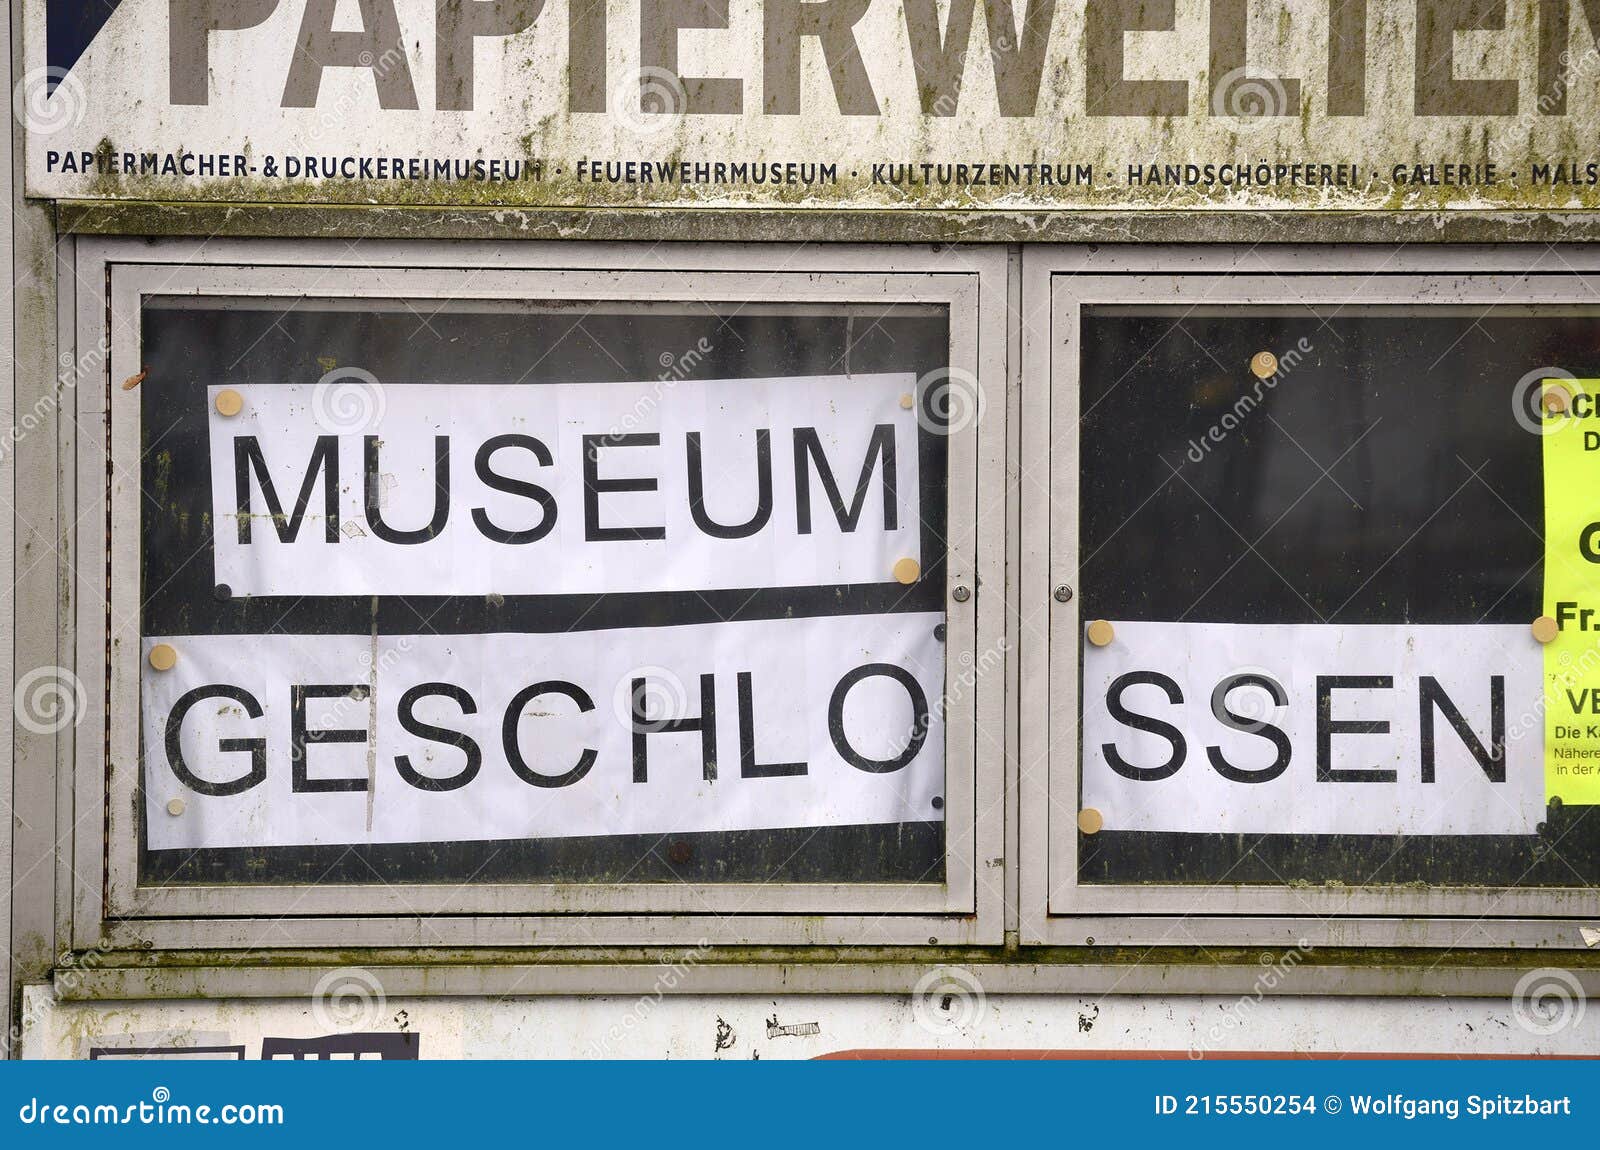 corona crisis - lockdown - closed museum in austria, europe